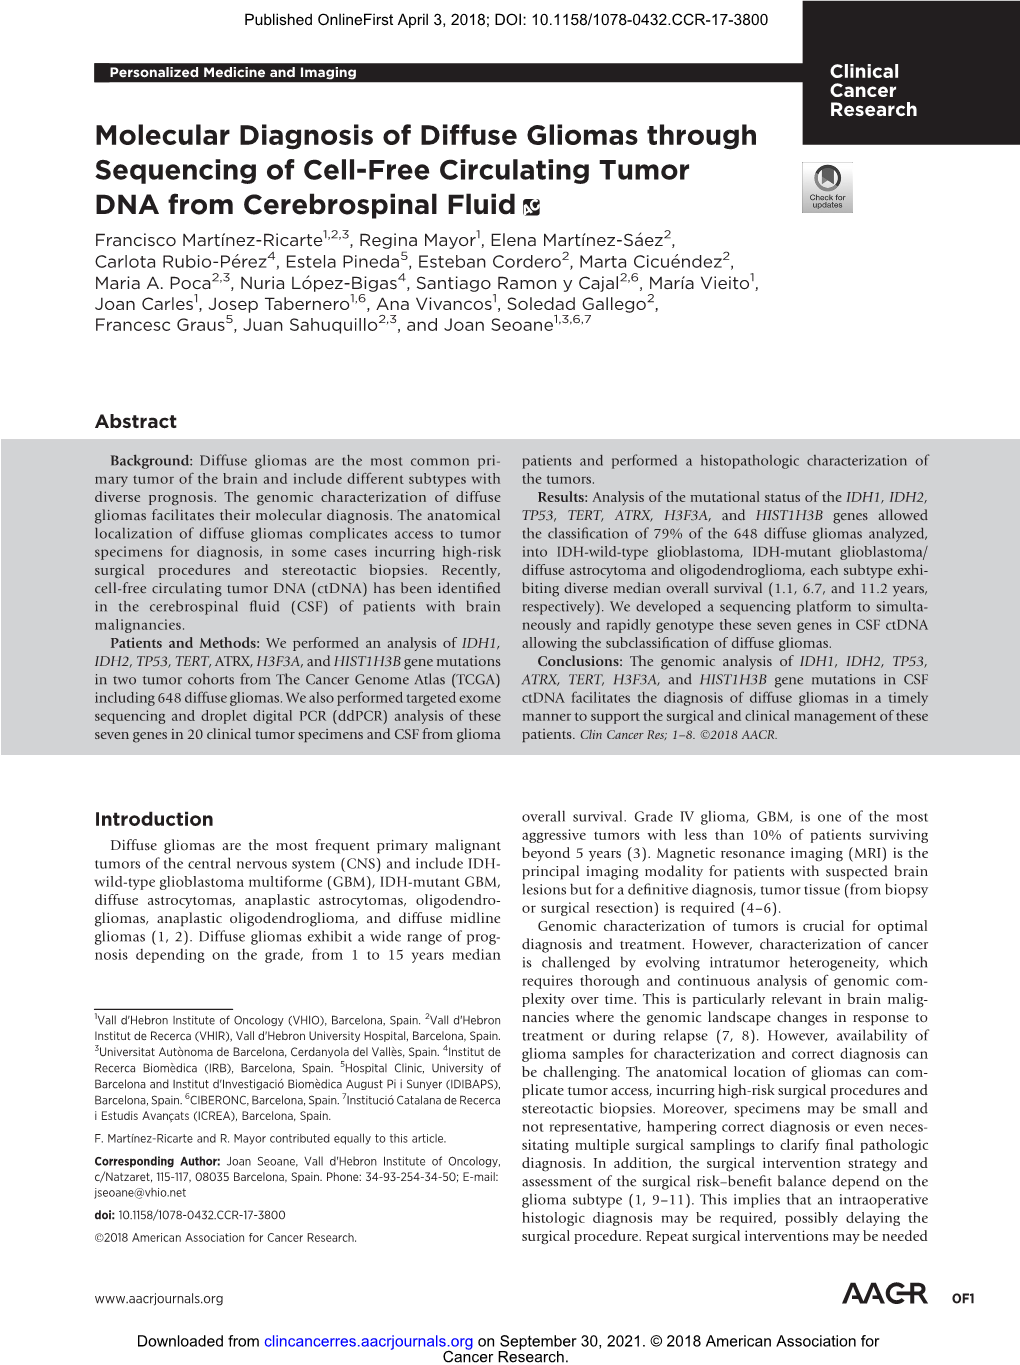 Molecular Diagnosis of Diffuse Gliomas Through Sequencing of Cell-Free Circulating Tumor DNA from Cerebrospinal Fluid